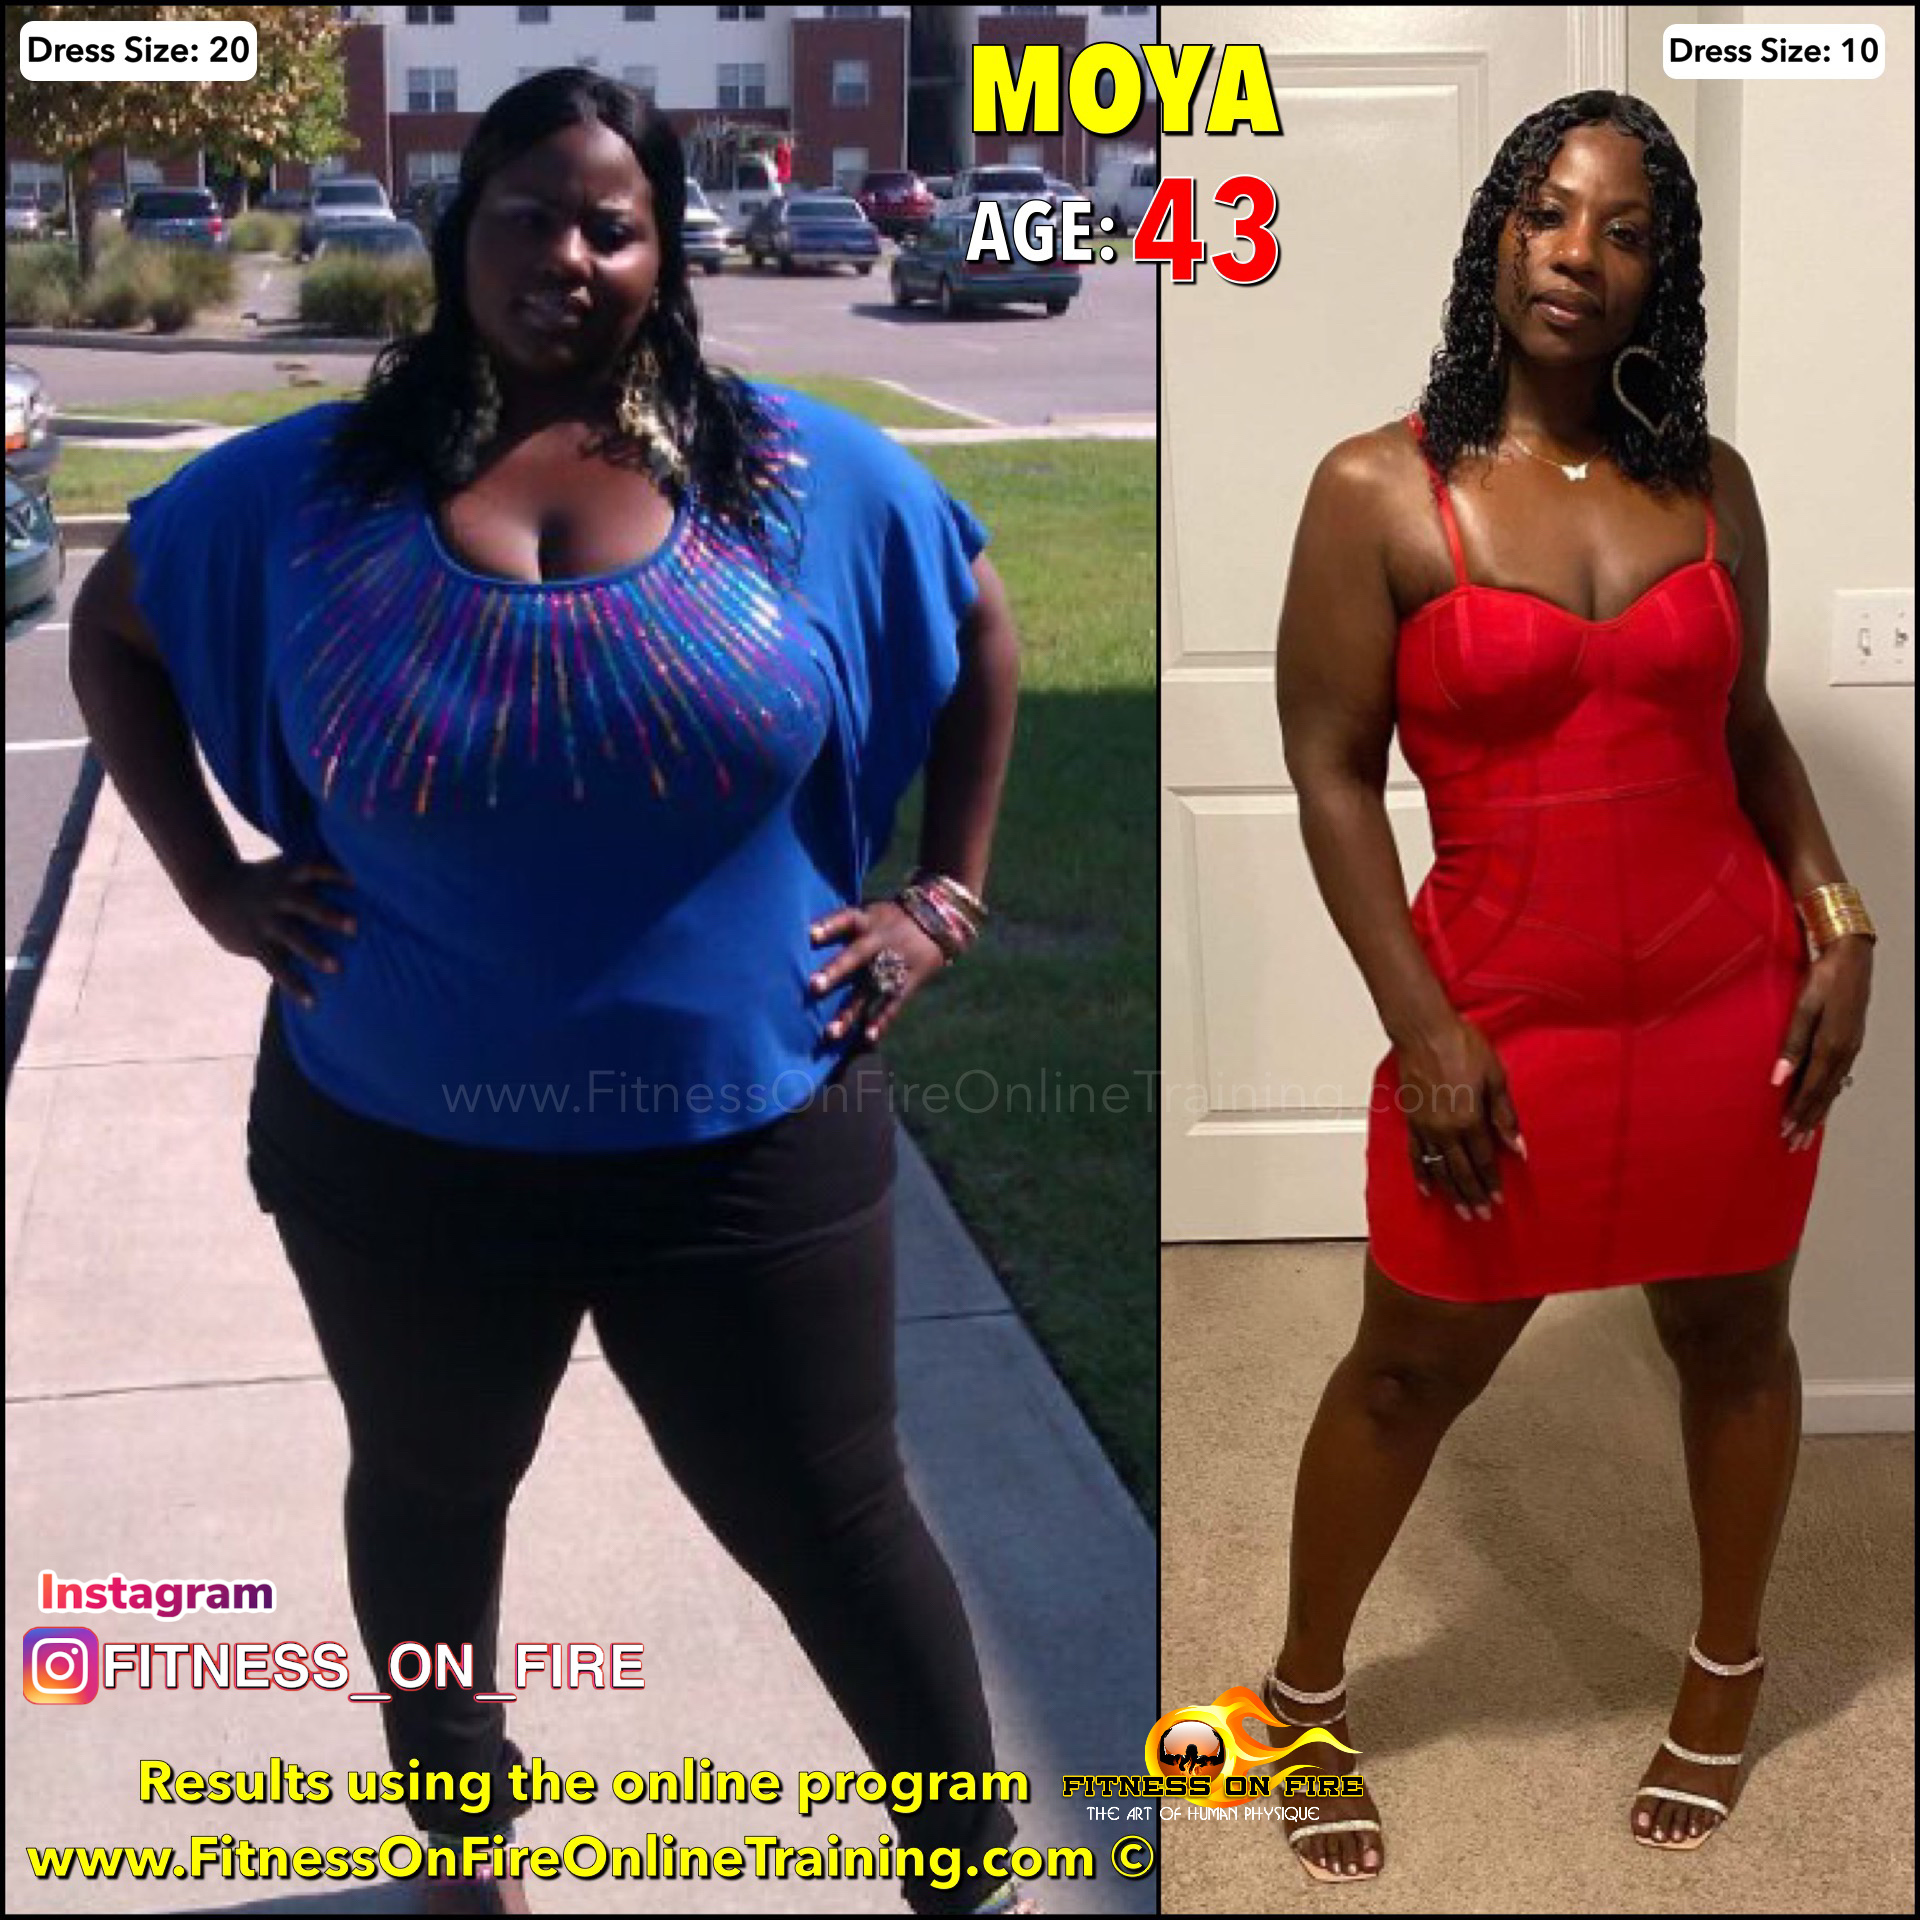 Moya, a 43-year-old woman, achieved an amazing body transformation